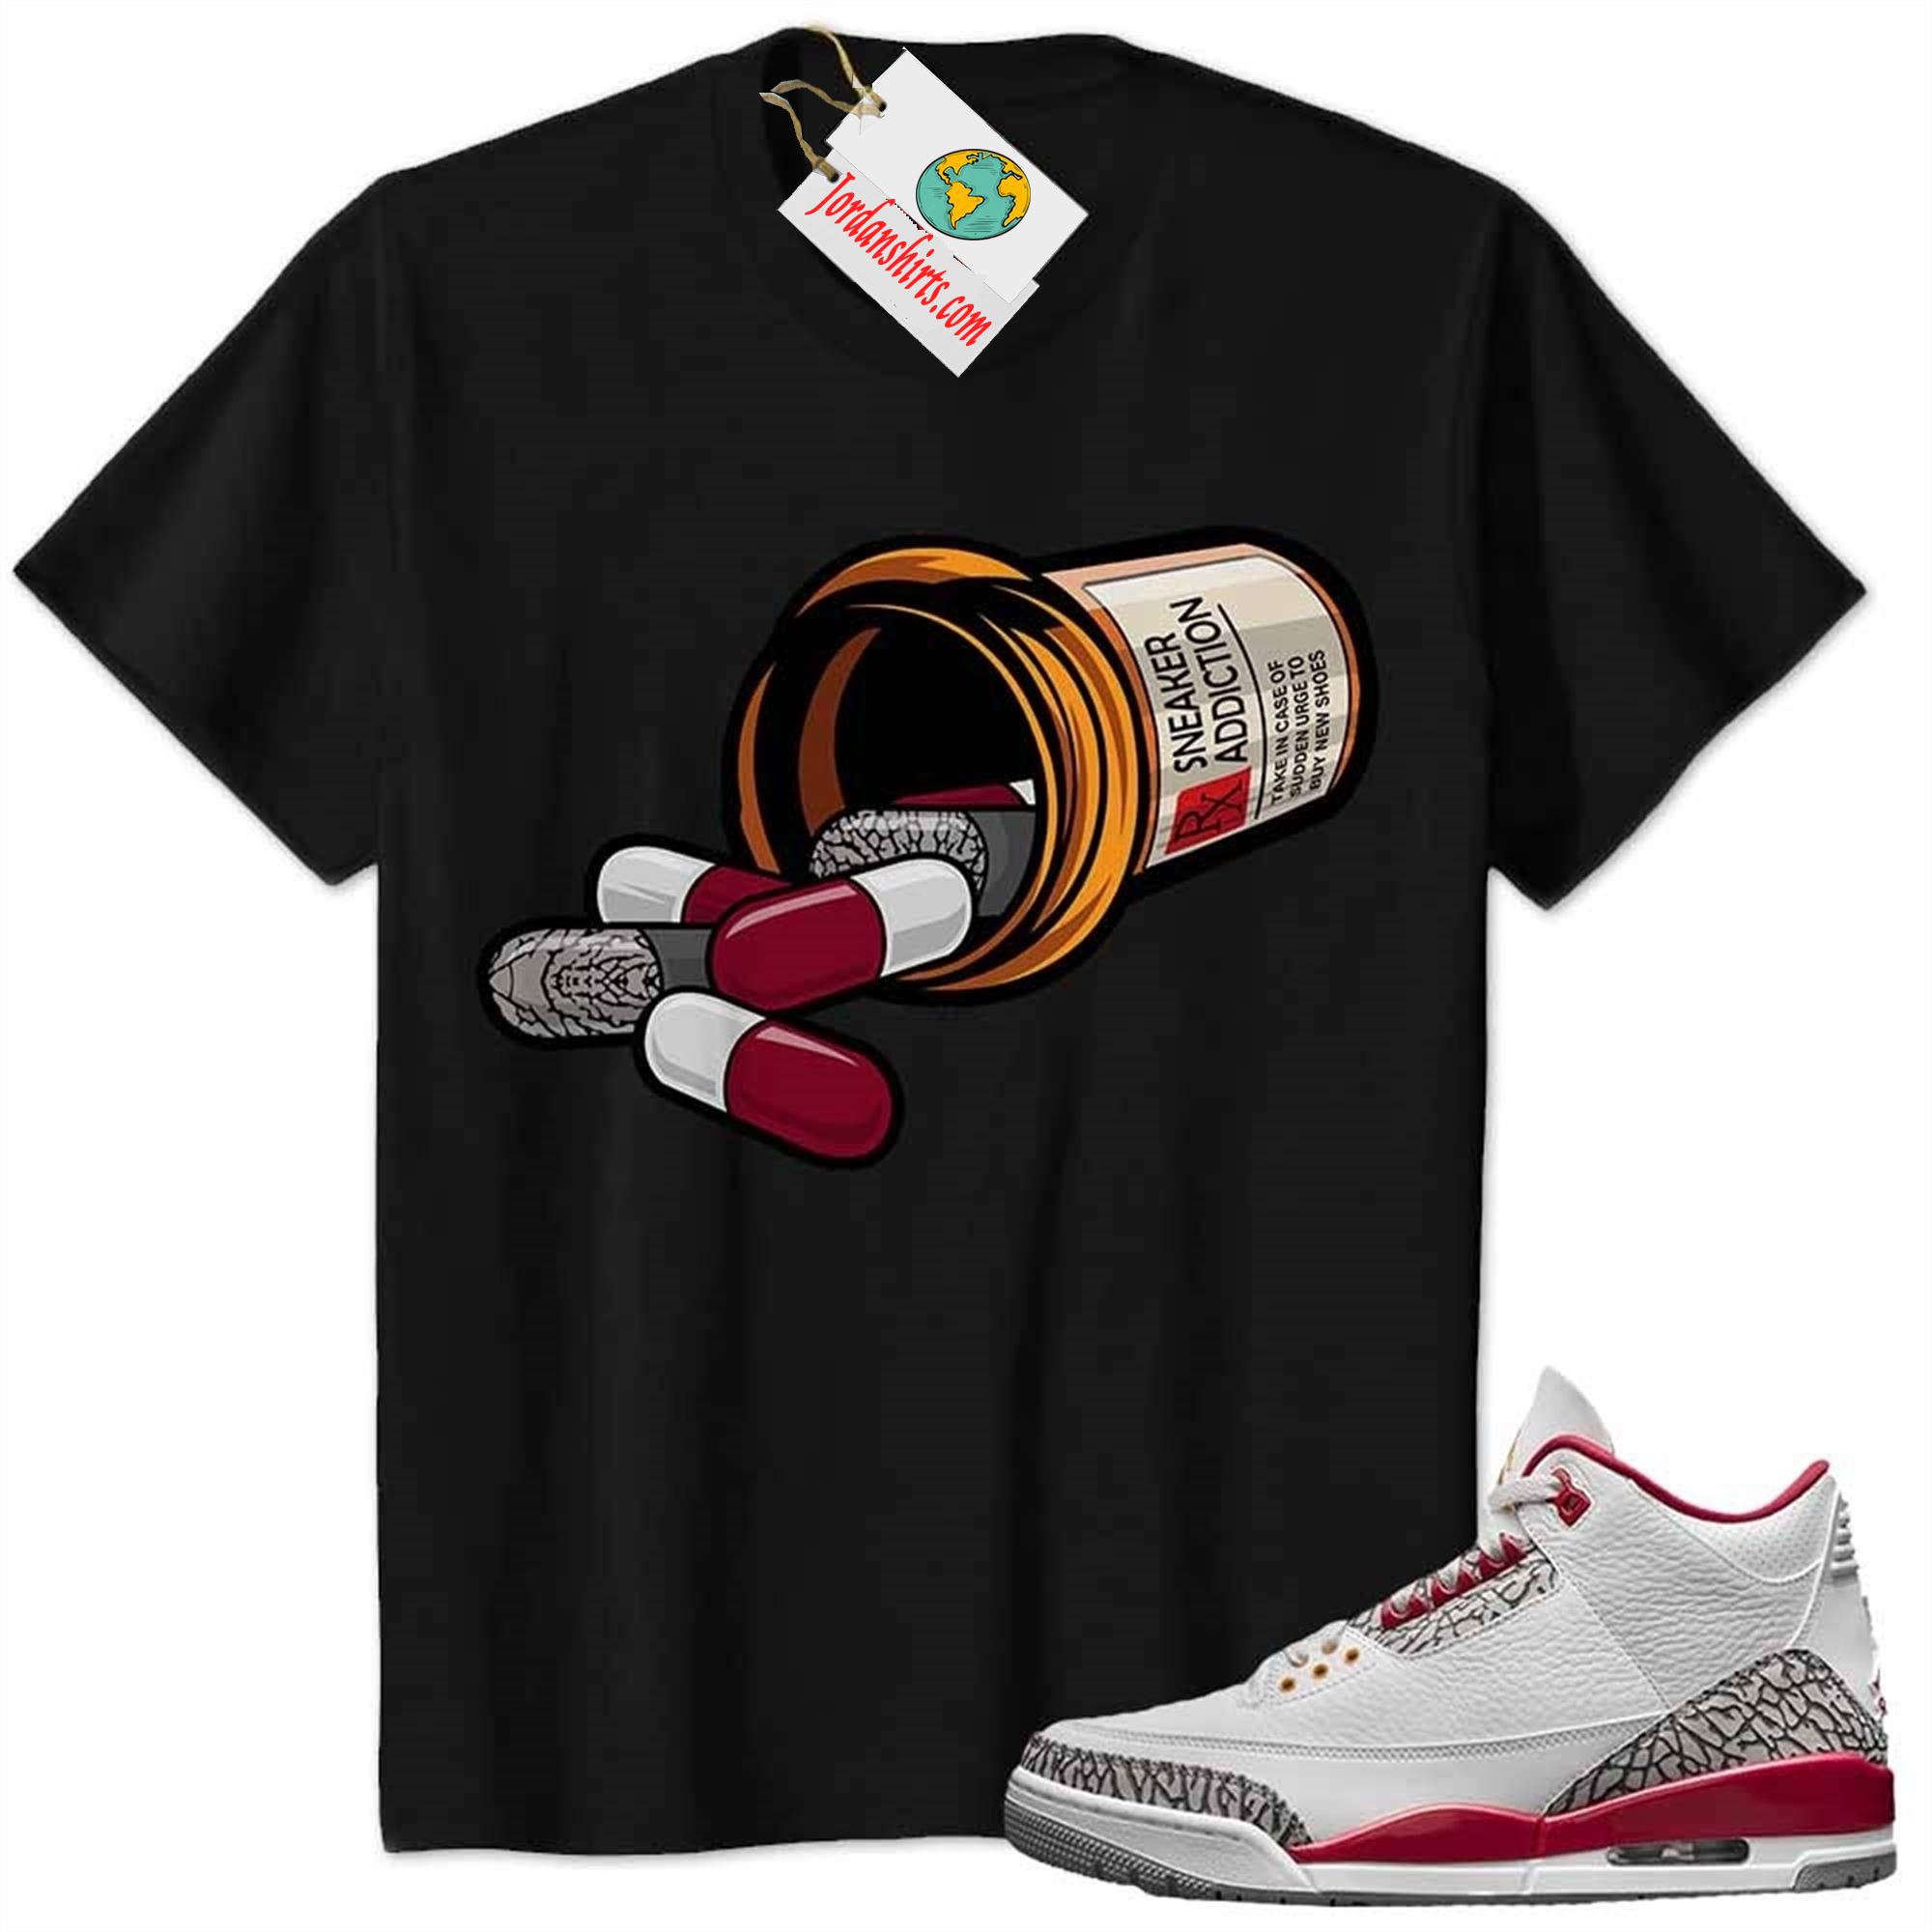 Jordan 3 Shirt, Rx Drugs Pill Bottle Sneaker Addiction Black Air Jordan 3 Cardinal Red 3s Size Up To 5xl